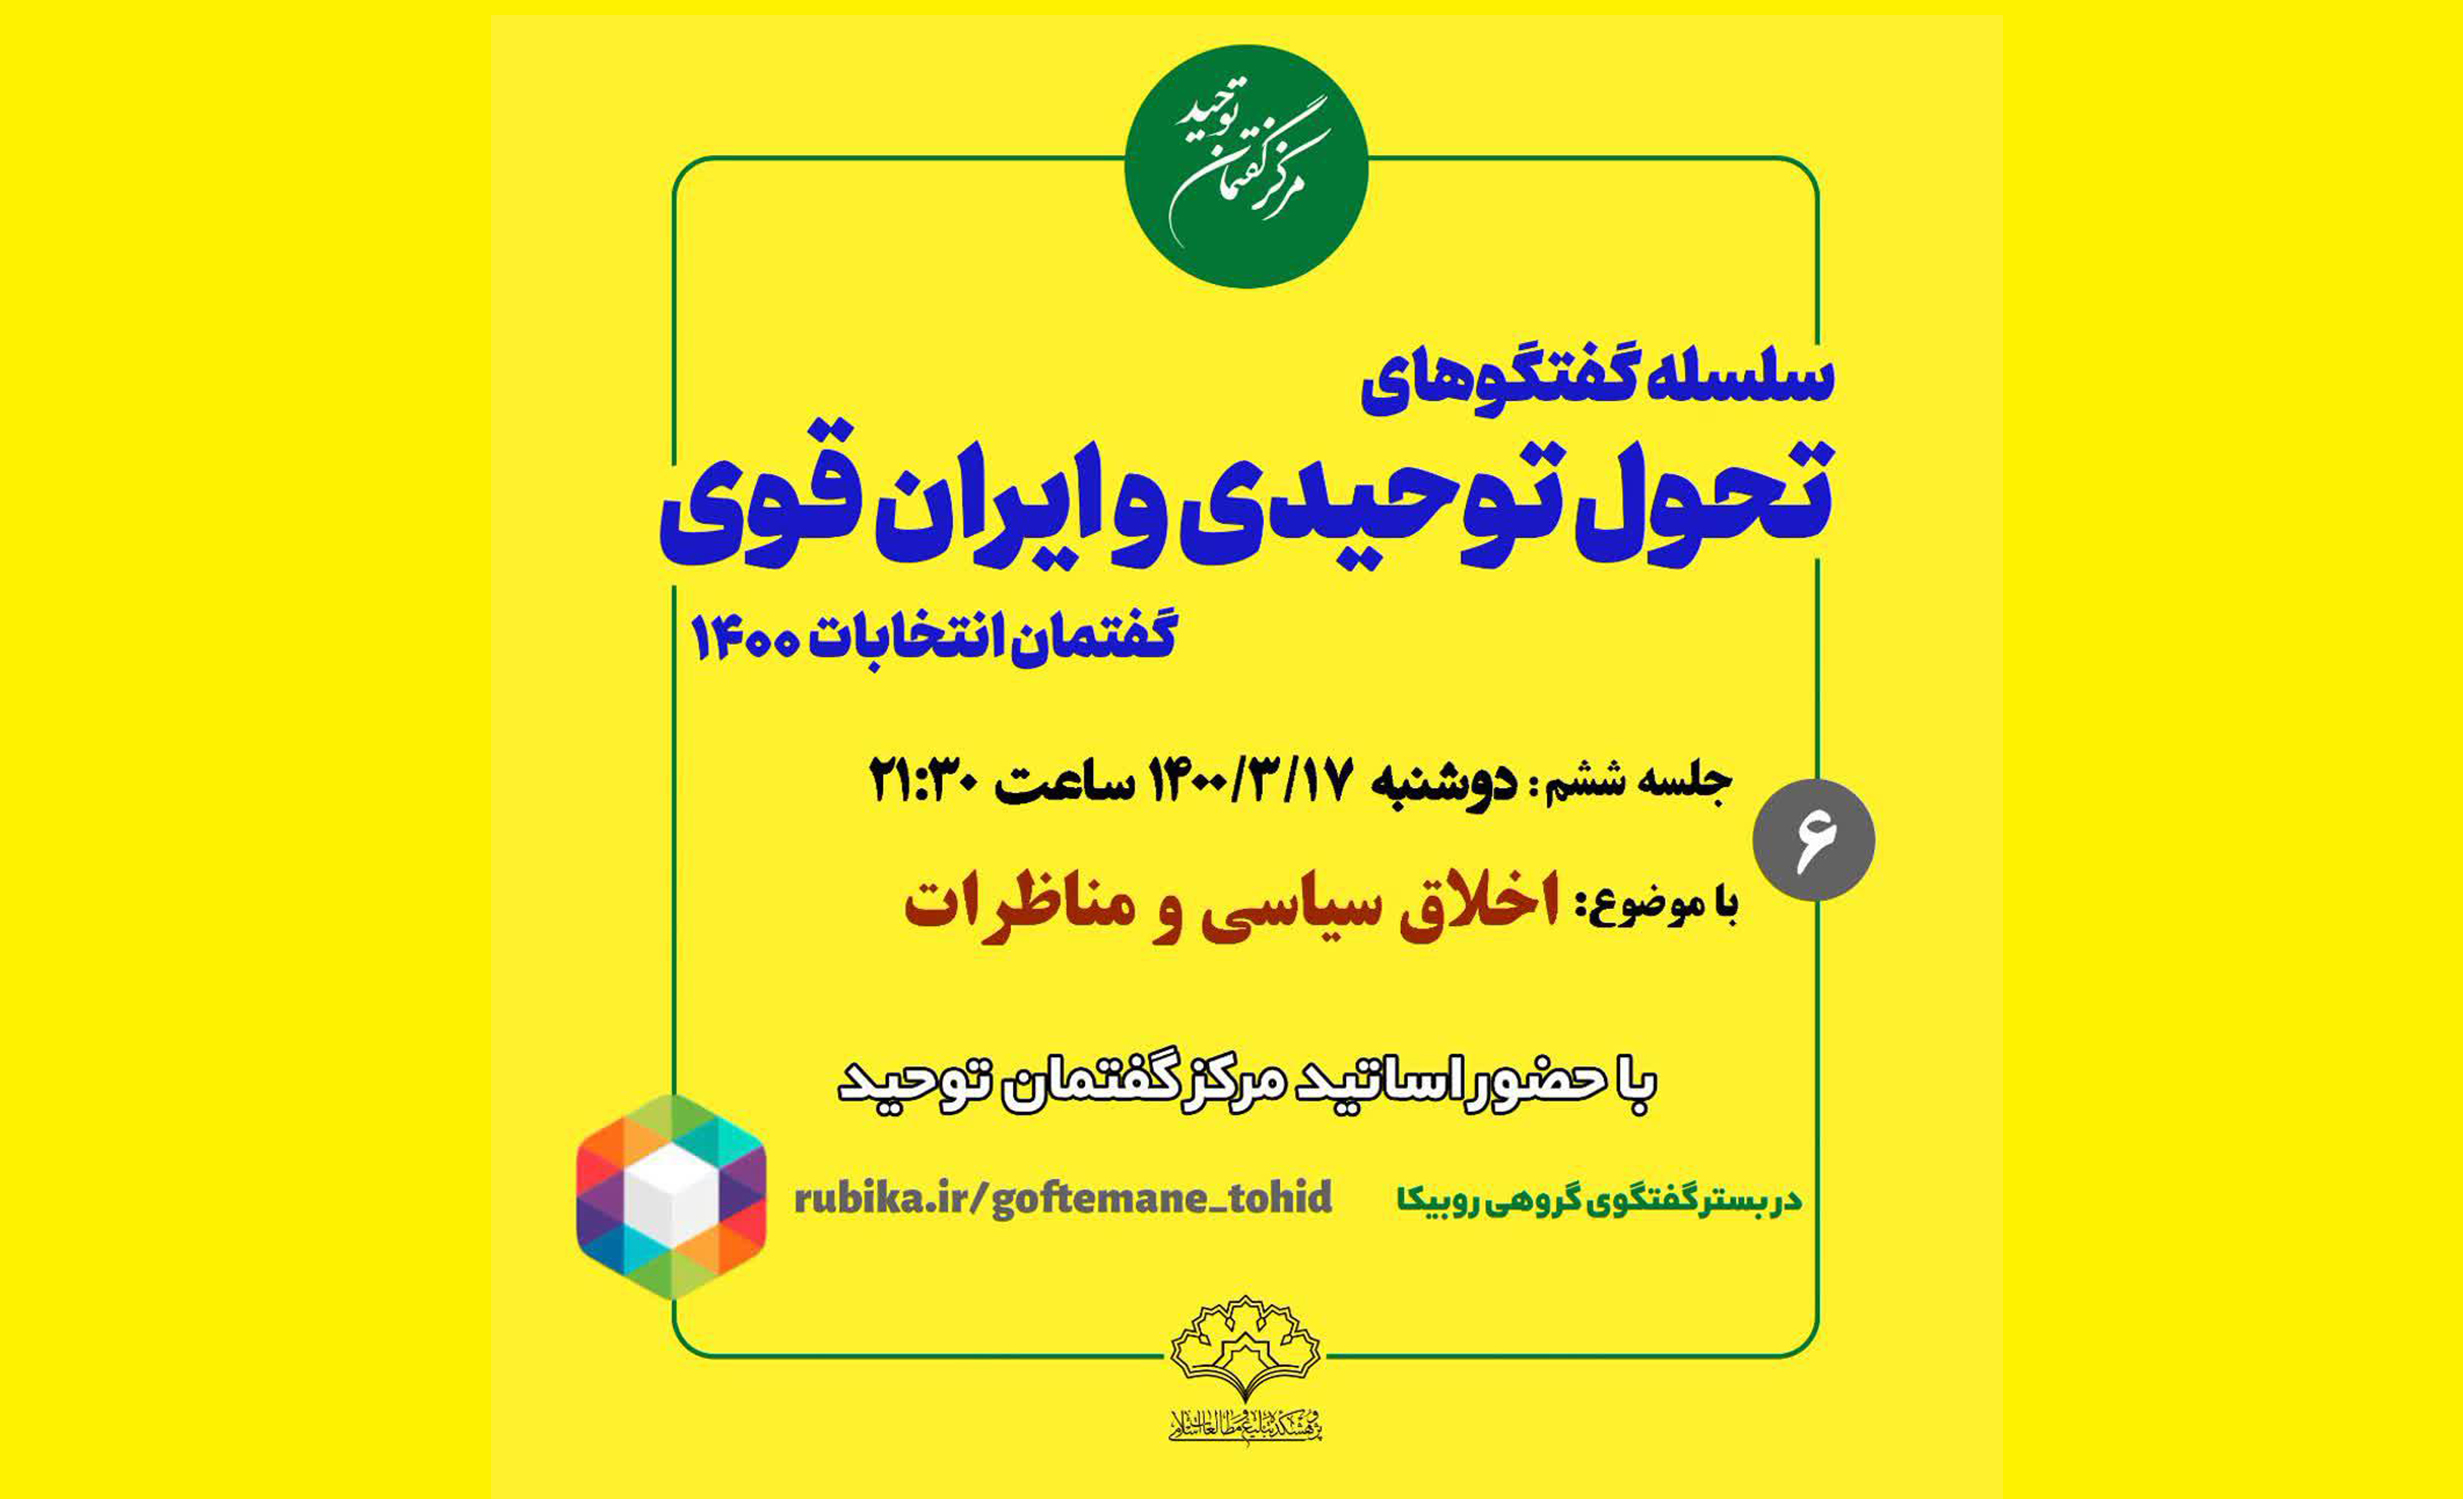 سلسله گفتگوهای گروهی تحول توحیدی و ایران قوی